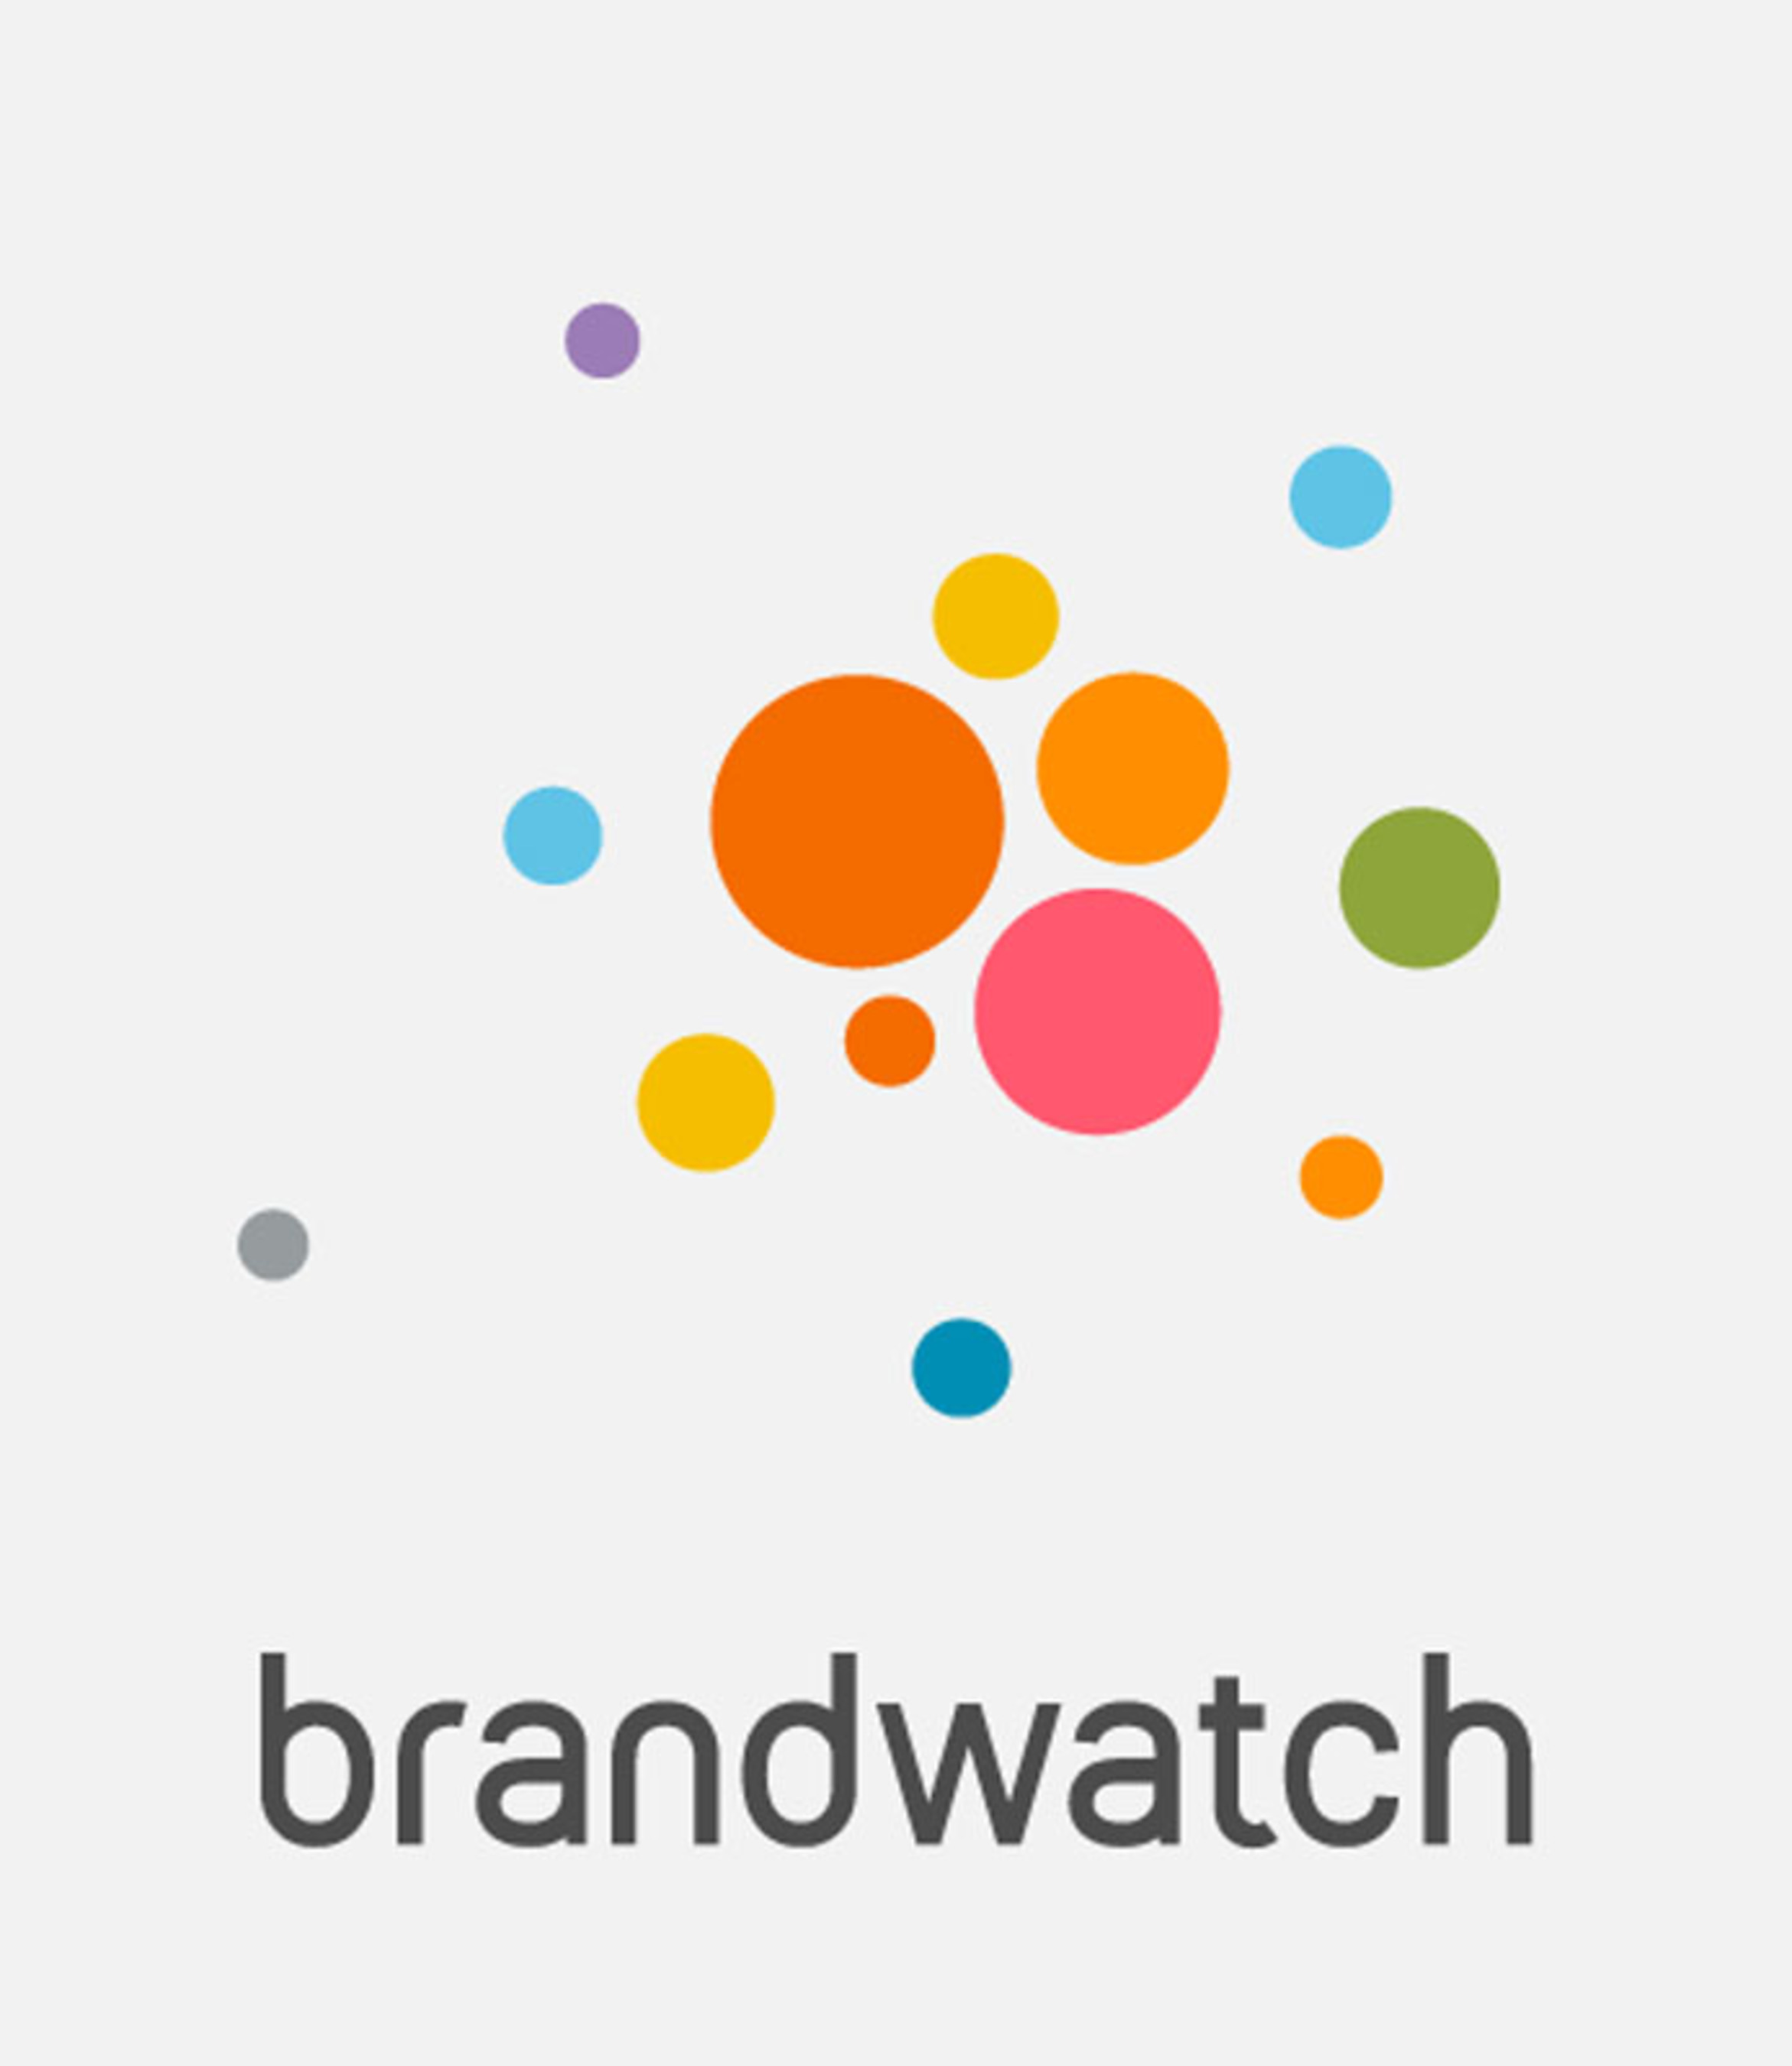 Brandwatch corporate logo.